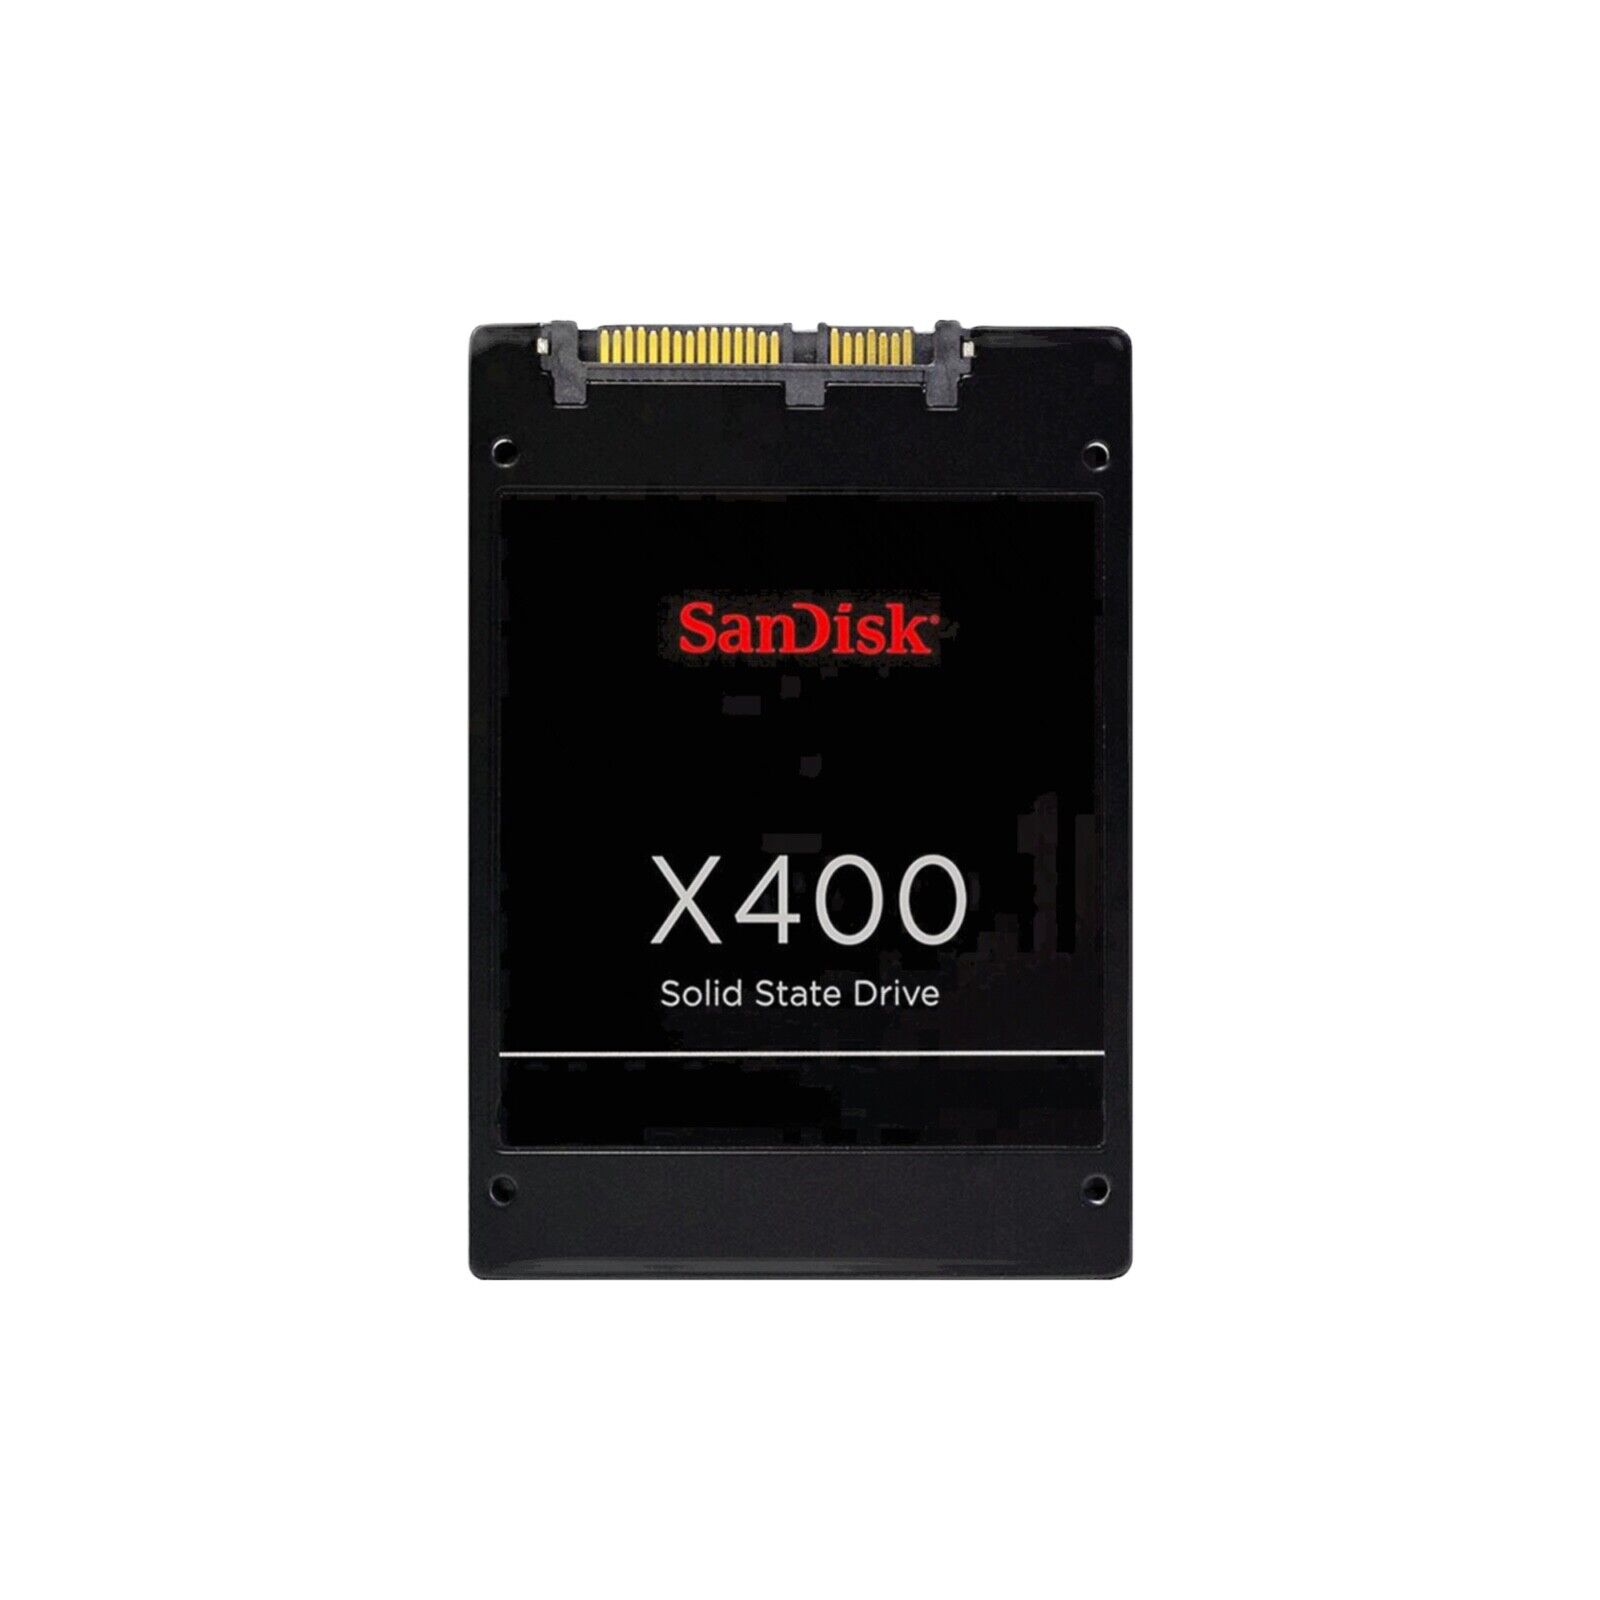 SET OF 9 SanDisk SD8SB8U-SATA III/M.2 256GB SSD